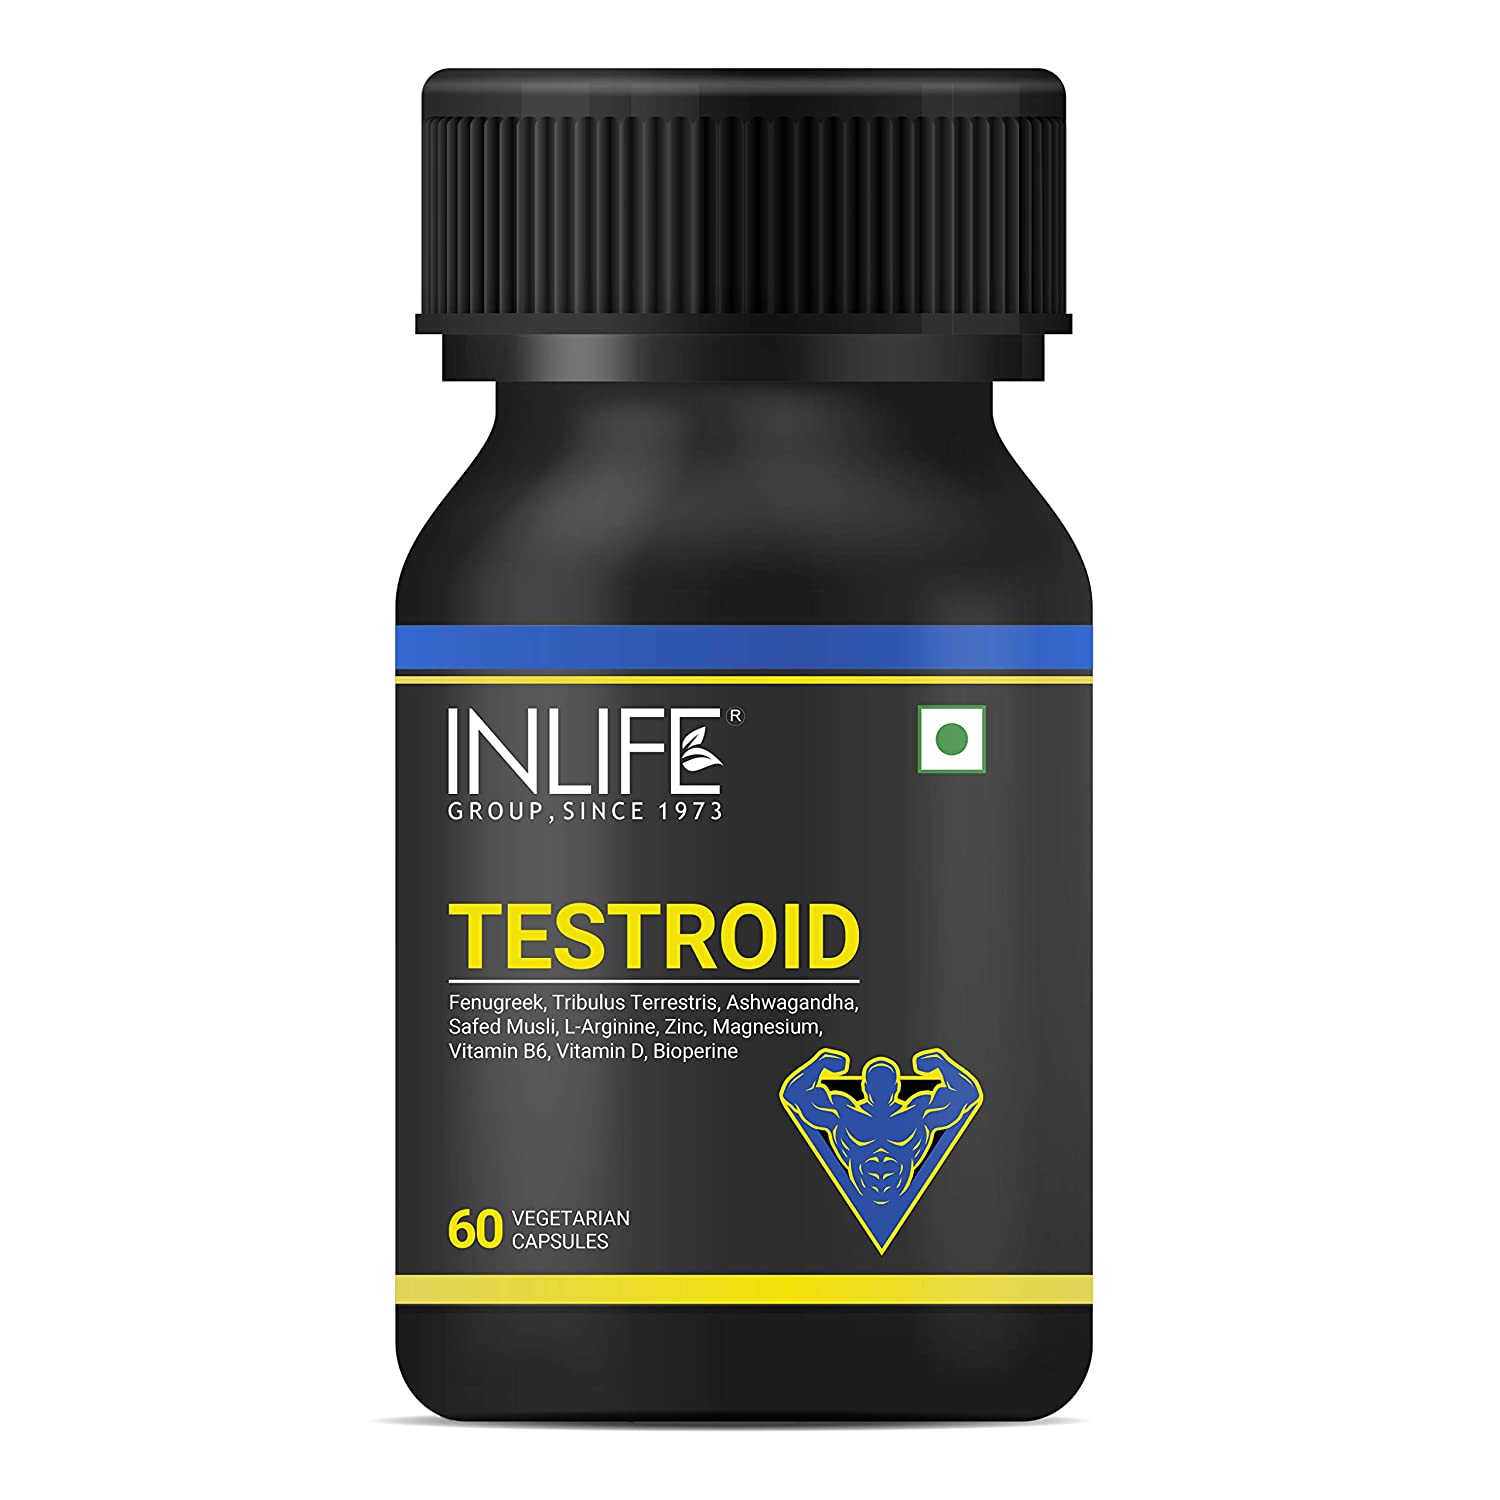 Inlife Testroid Supplement Image